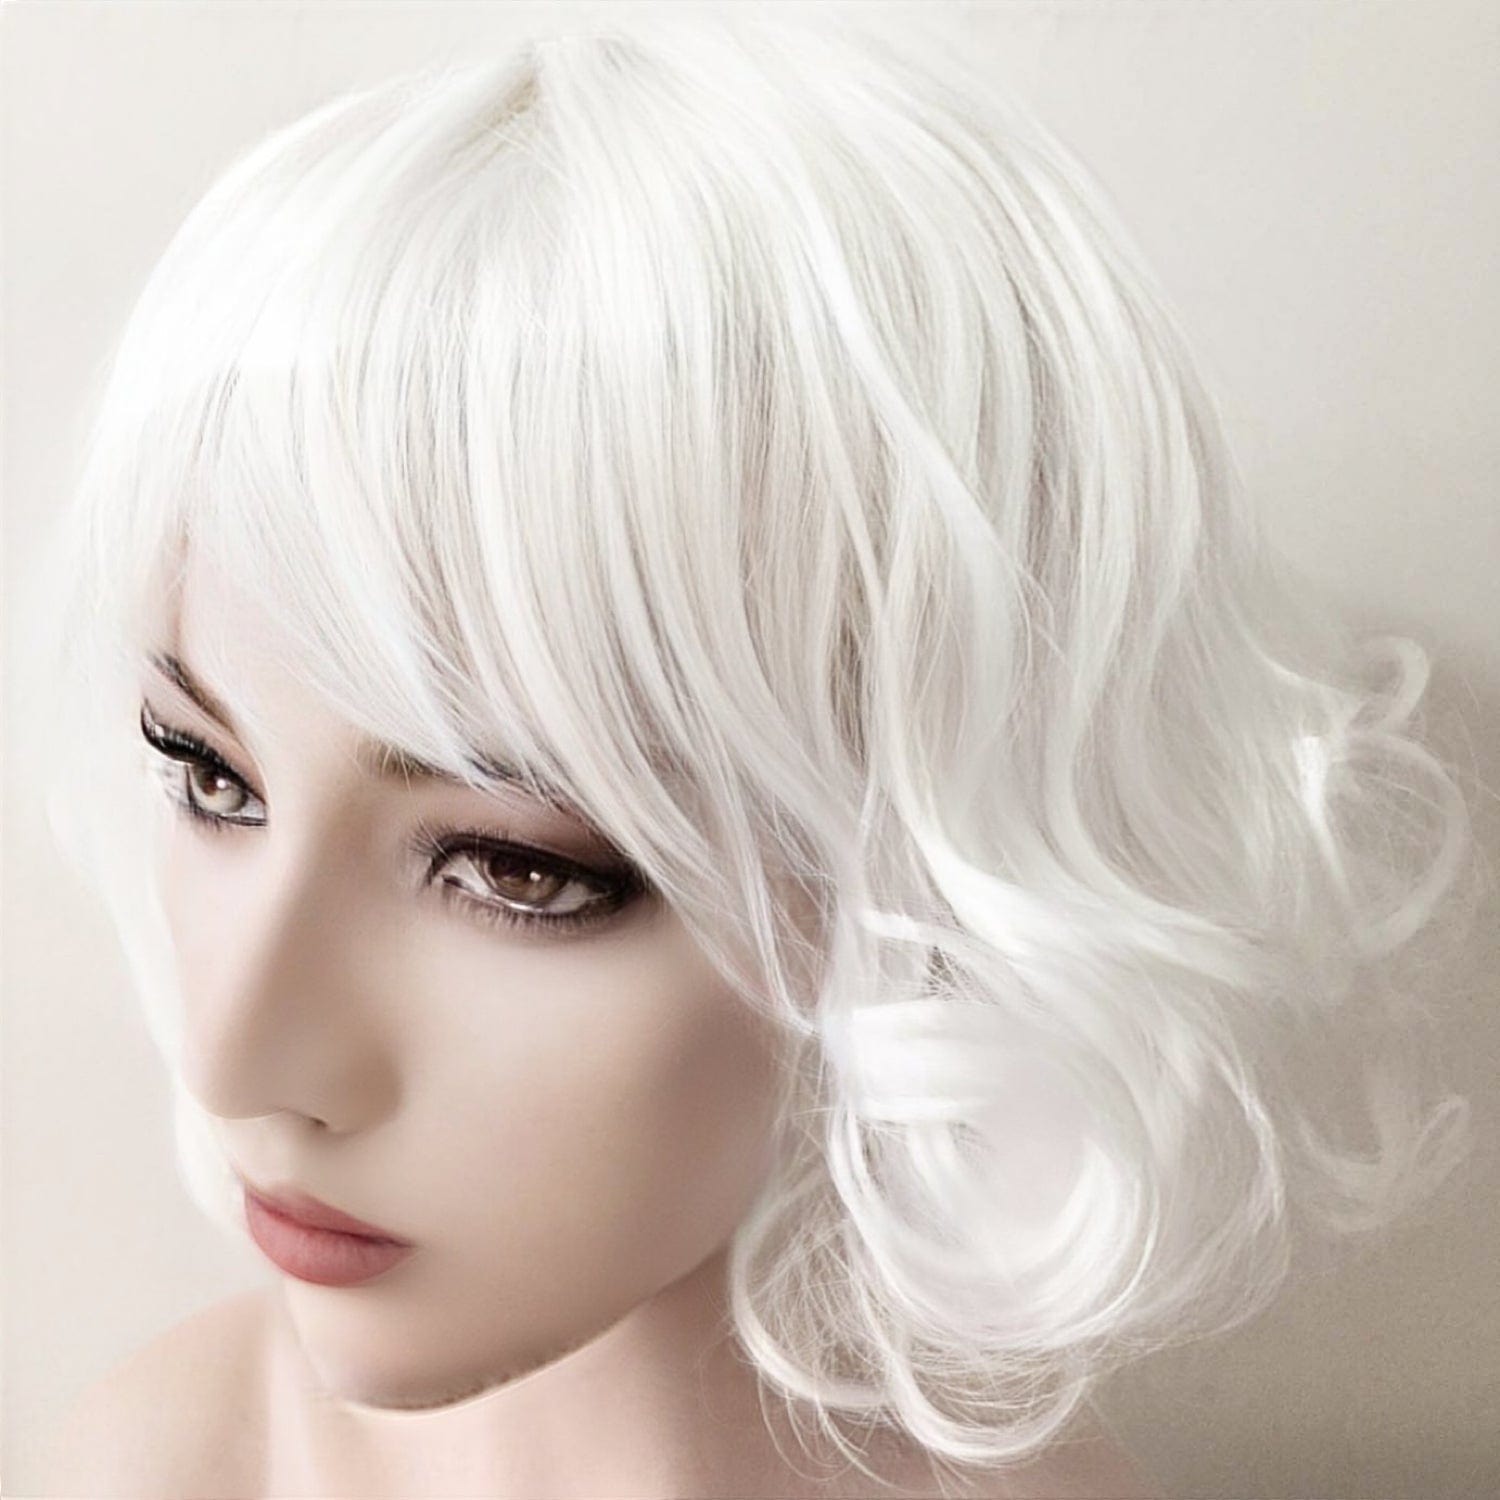 nevermindyrhead Women White Short Curly Fringe Bangs Lolita Wig